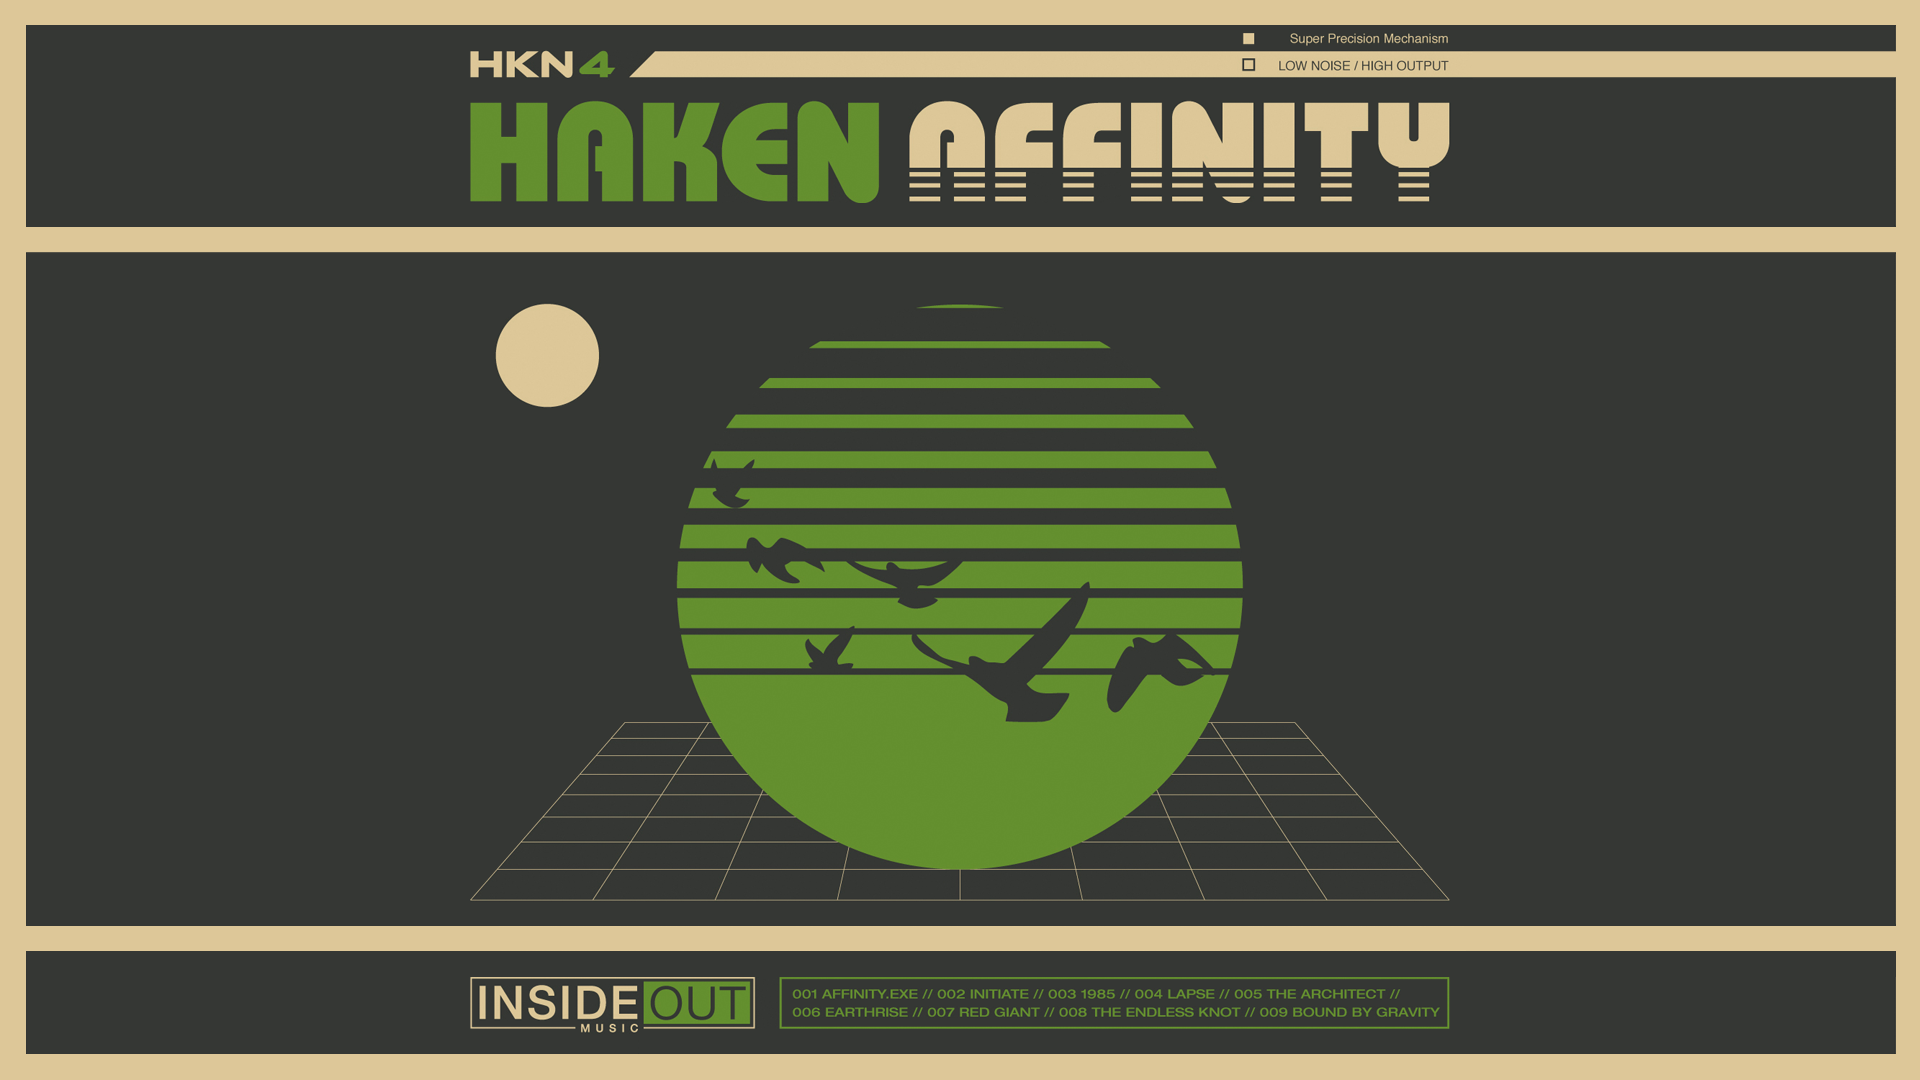 General 1920x1080 Haken music progressive rock progressive metal album covers cover art Affinity retro theme